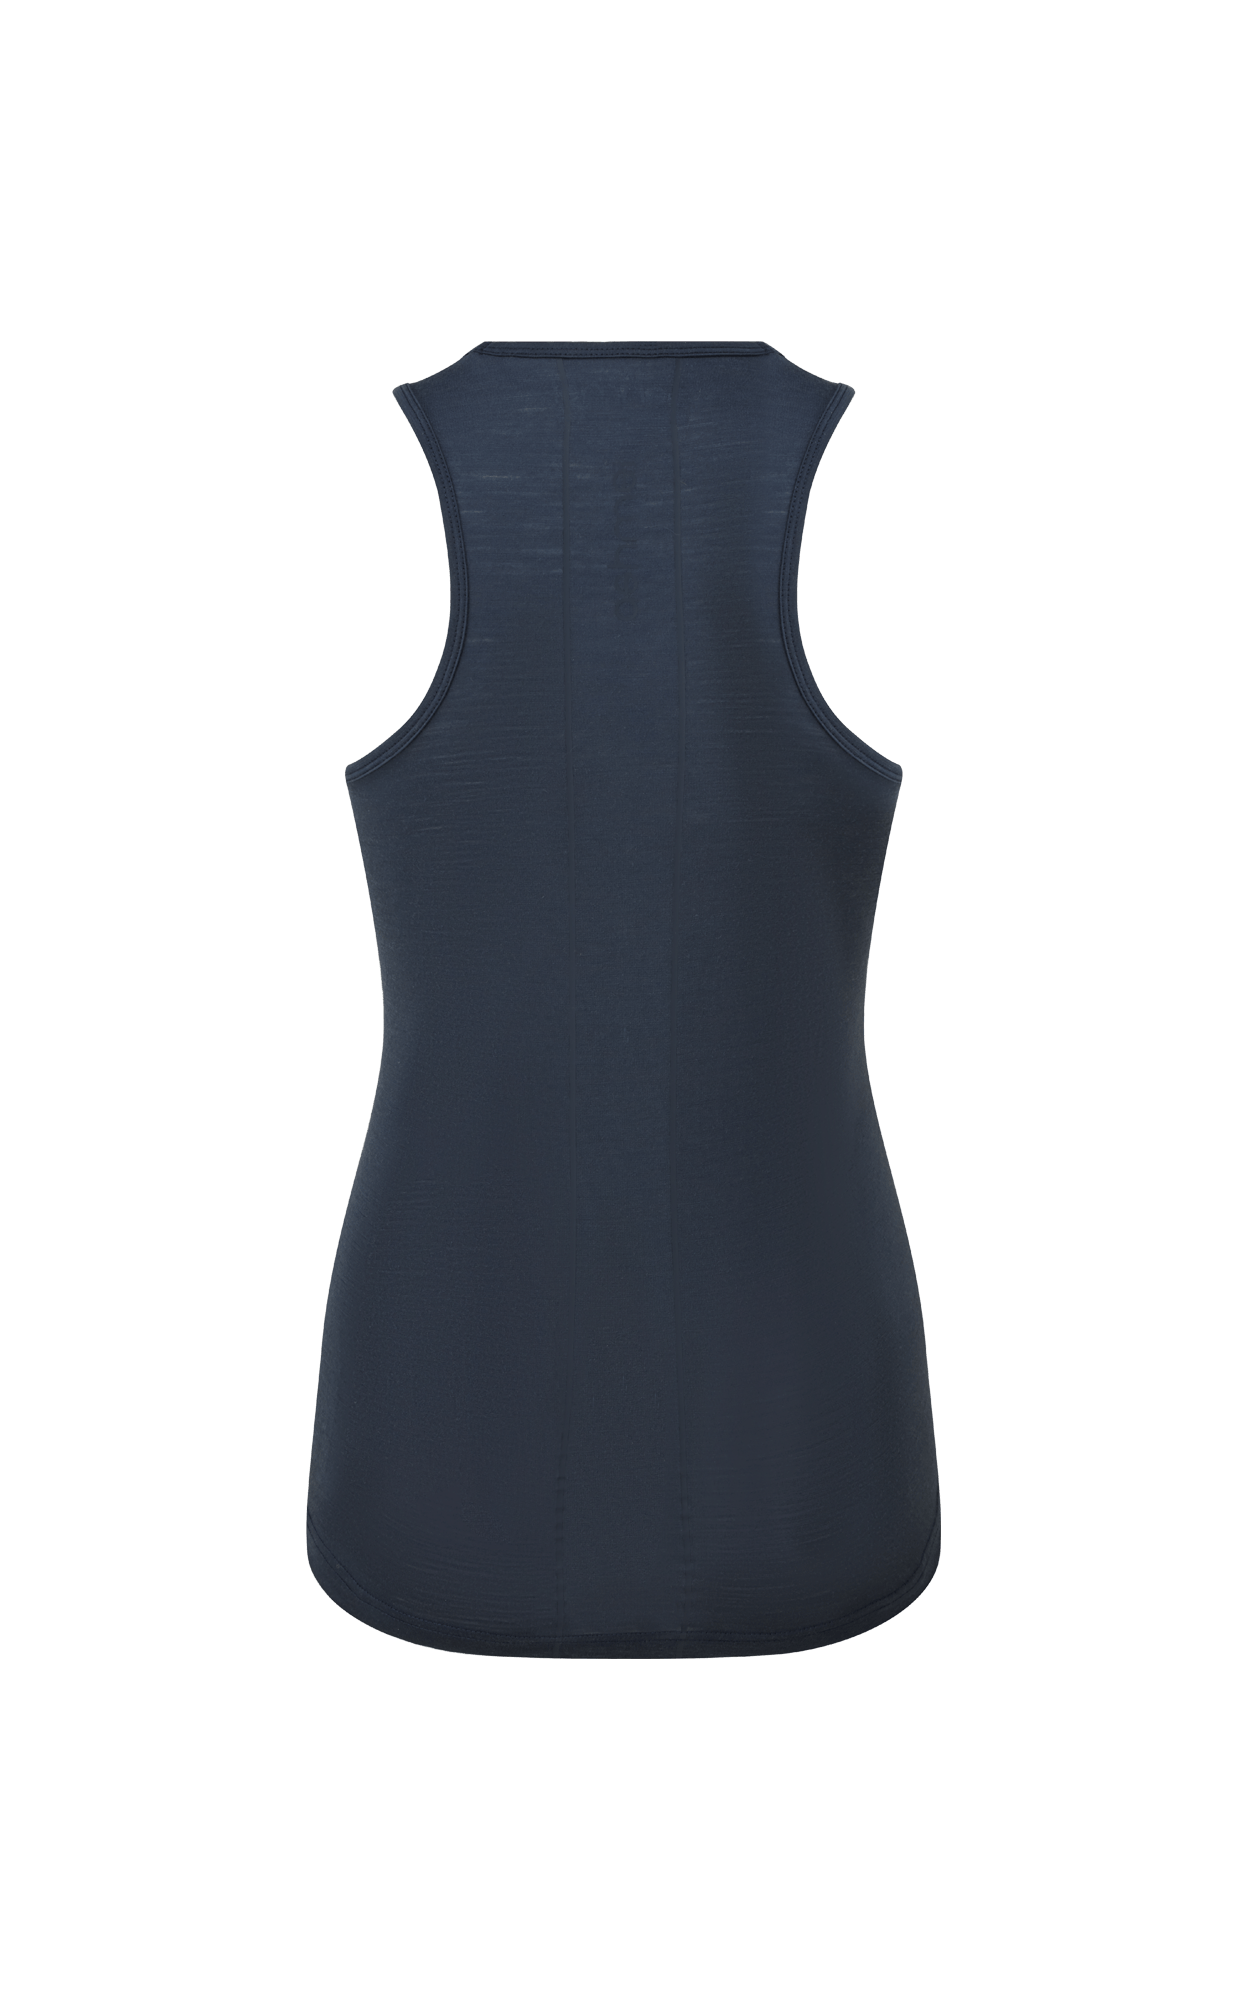 Ashmei - Classic Run Vest (Navy) - Women's